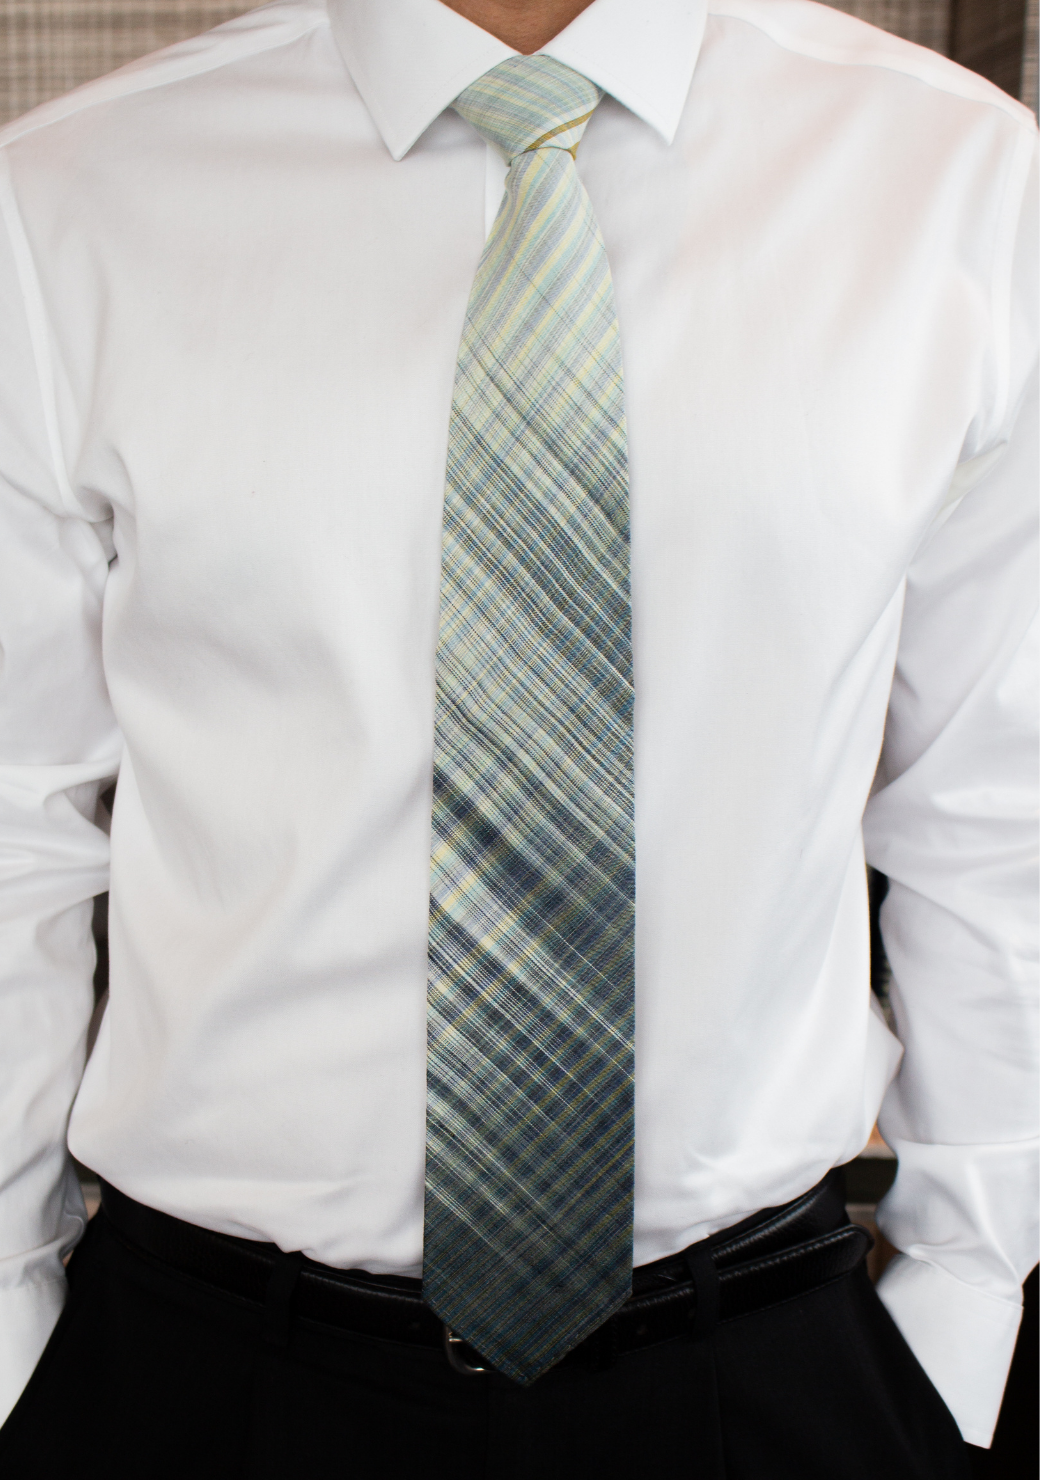 Tenun Silk Tie in Mixed Grey